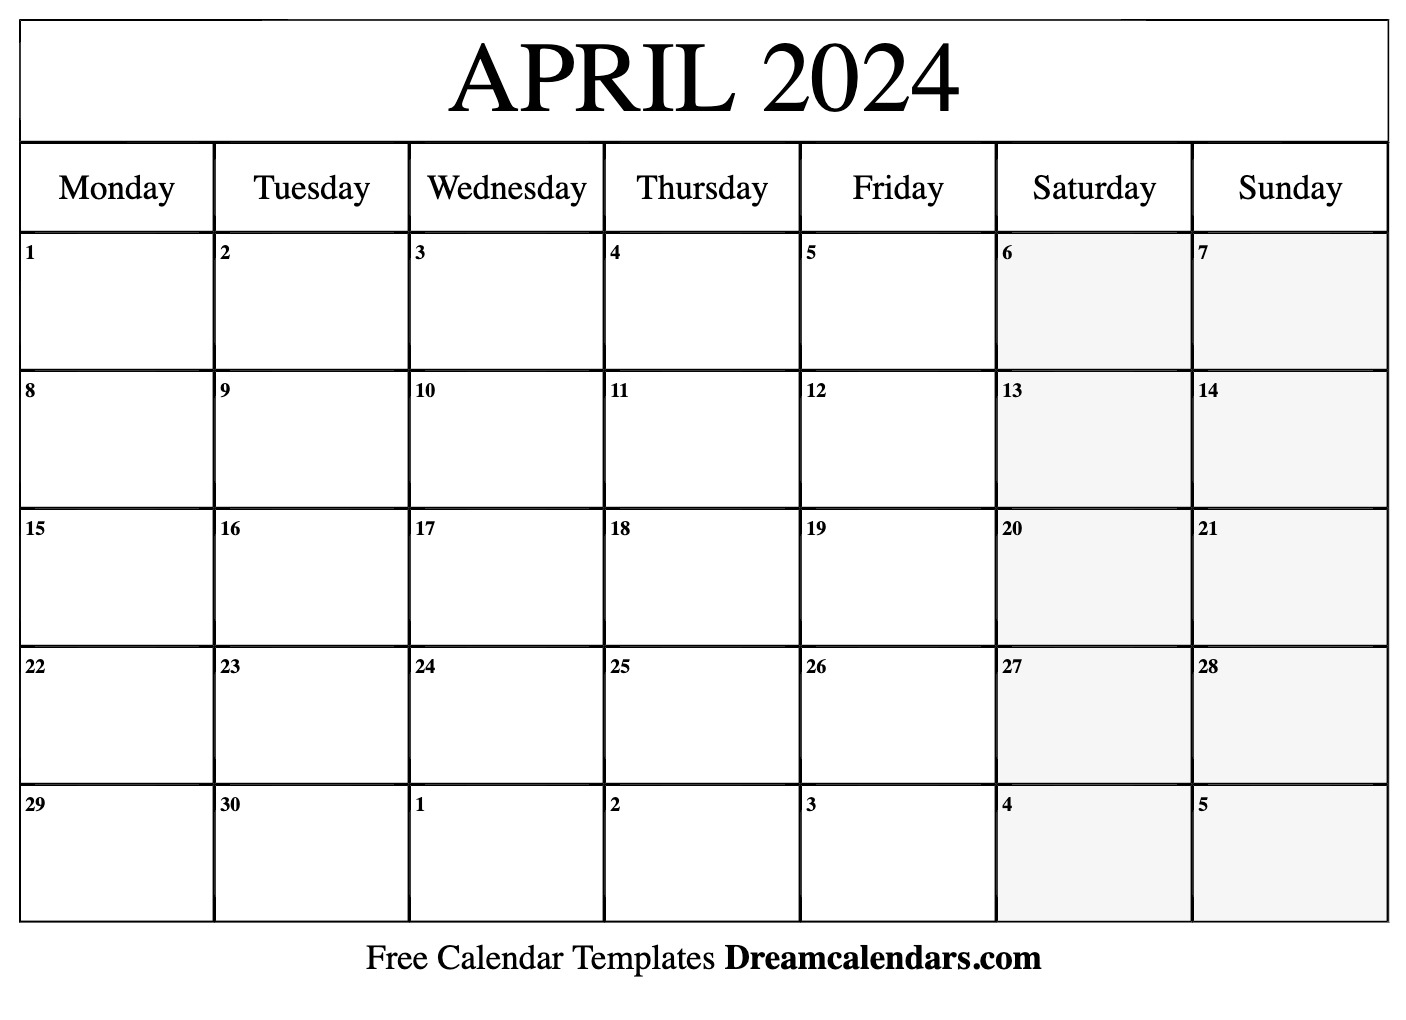 April 2024 Calendar | Free Blank Printable With Holidays for April 2024 Blank Printable Calendar